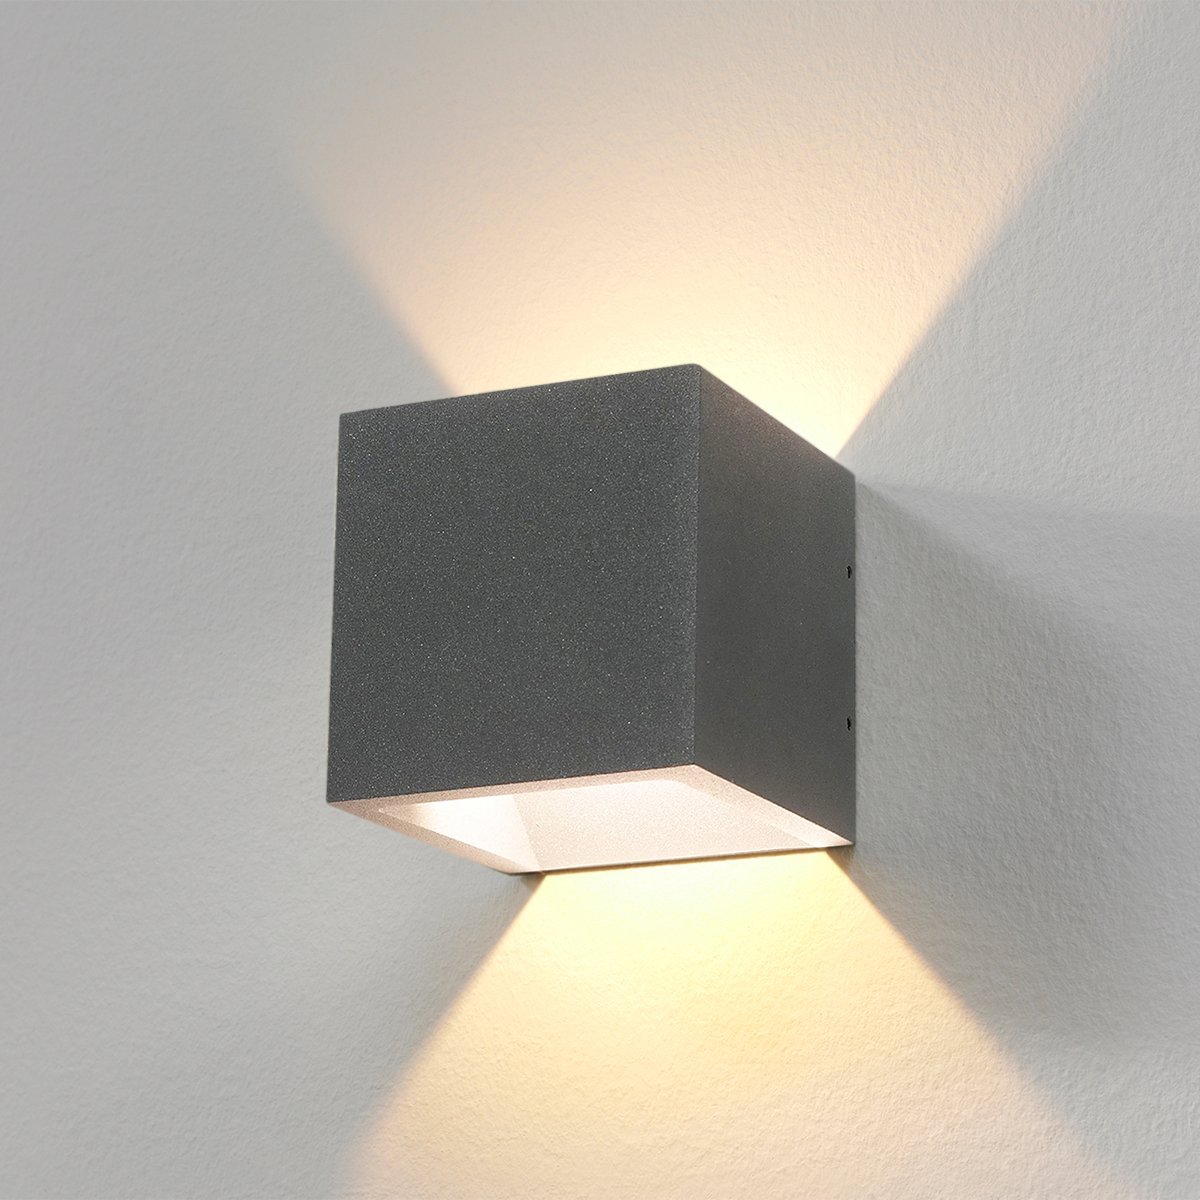 Wandlamp Cube up down grijs Torno - 10 cm